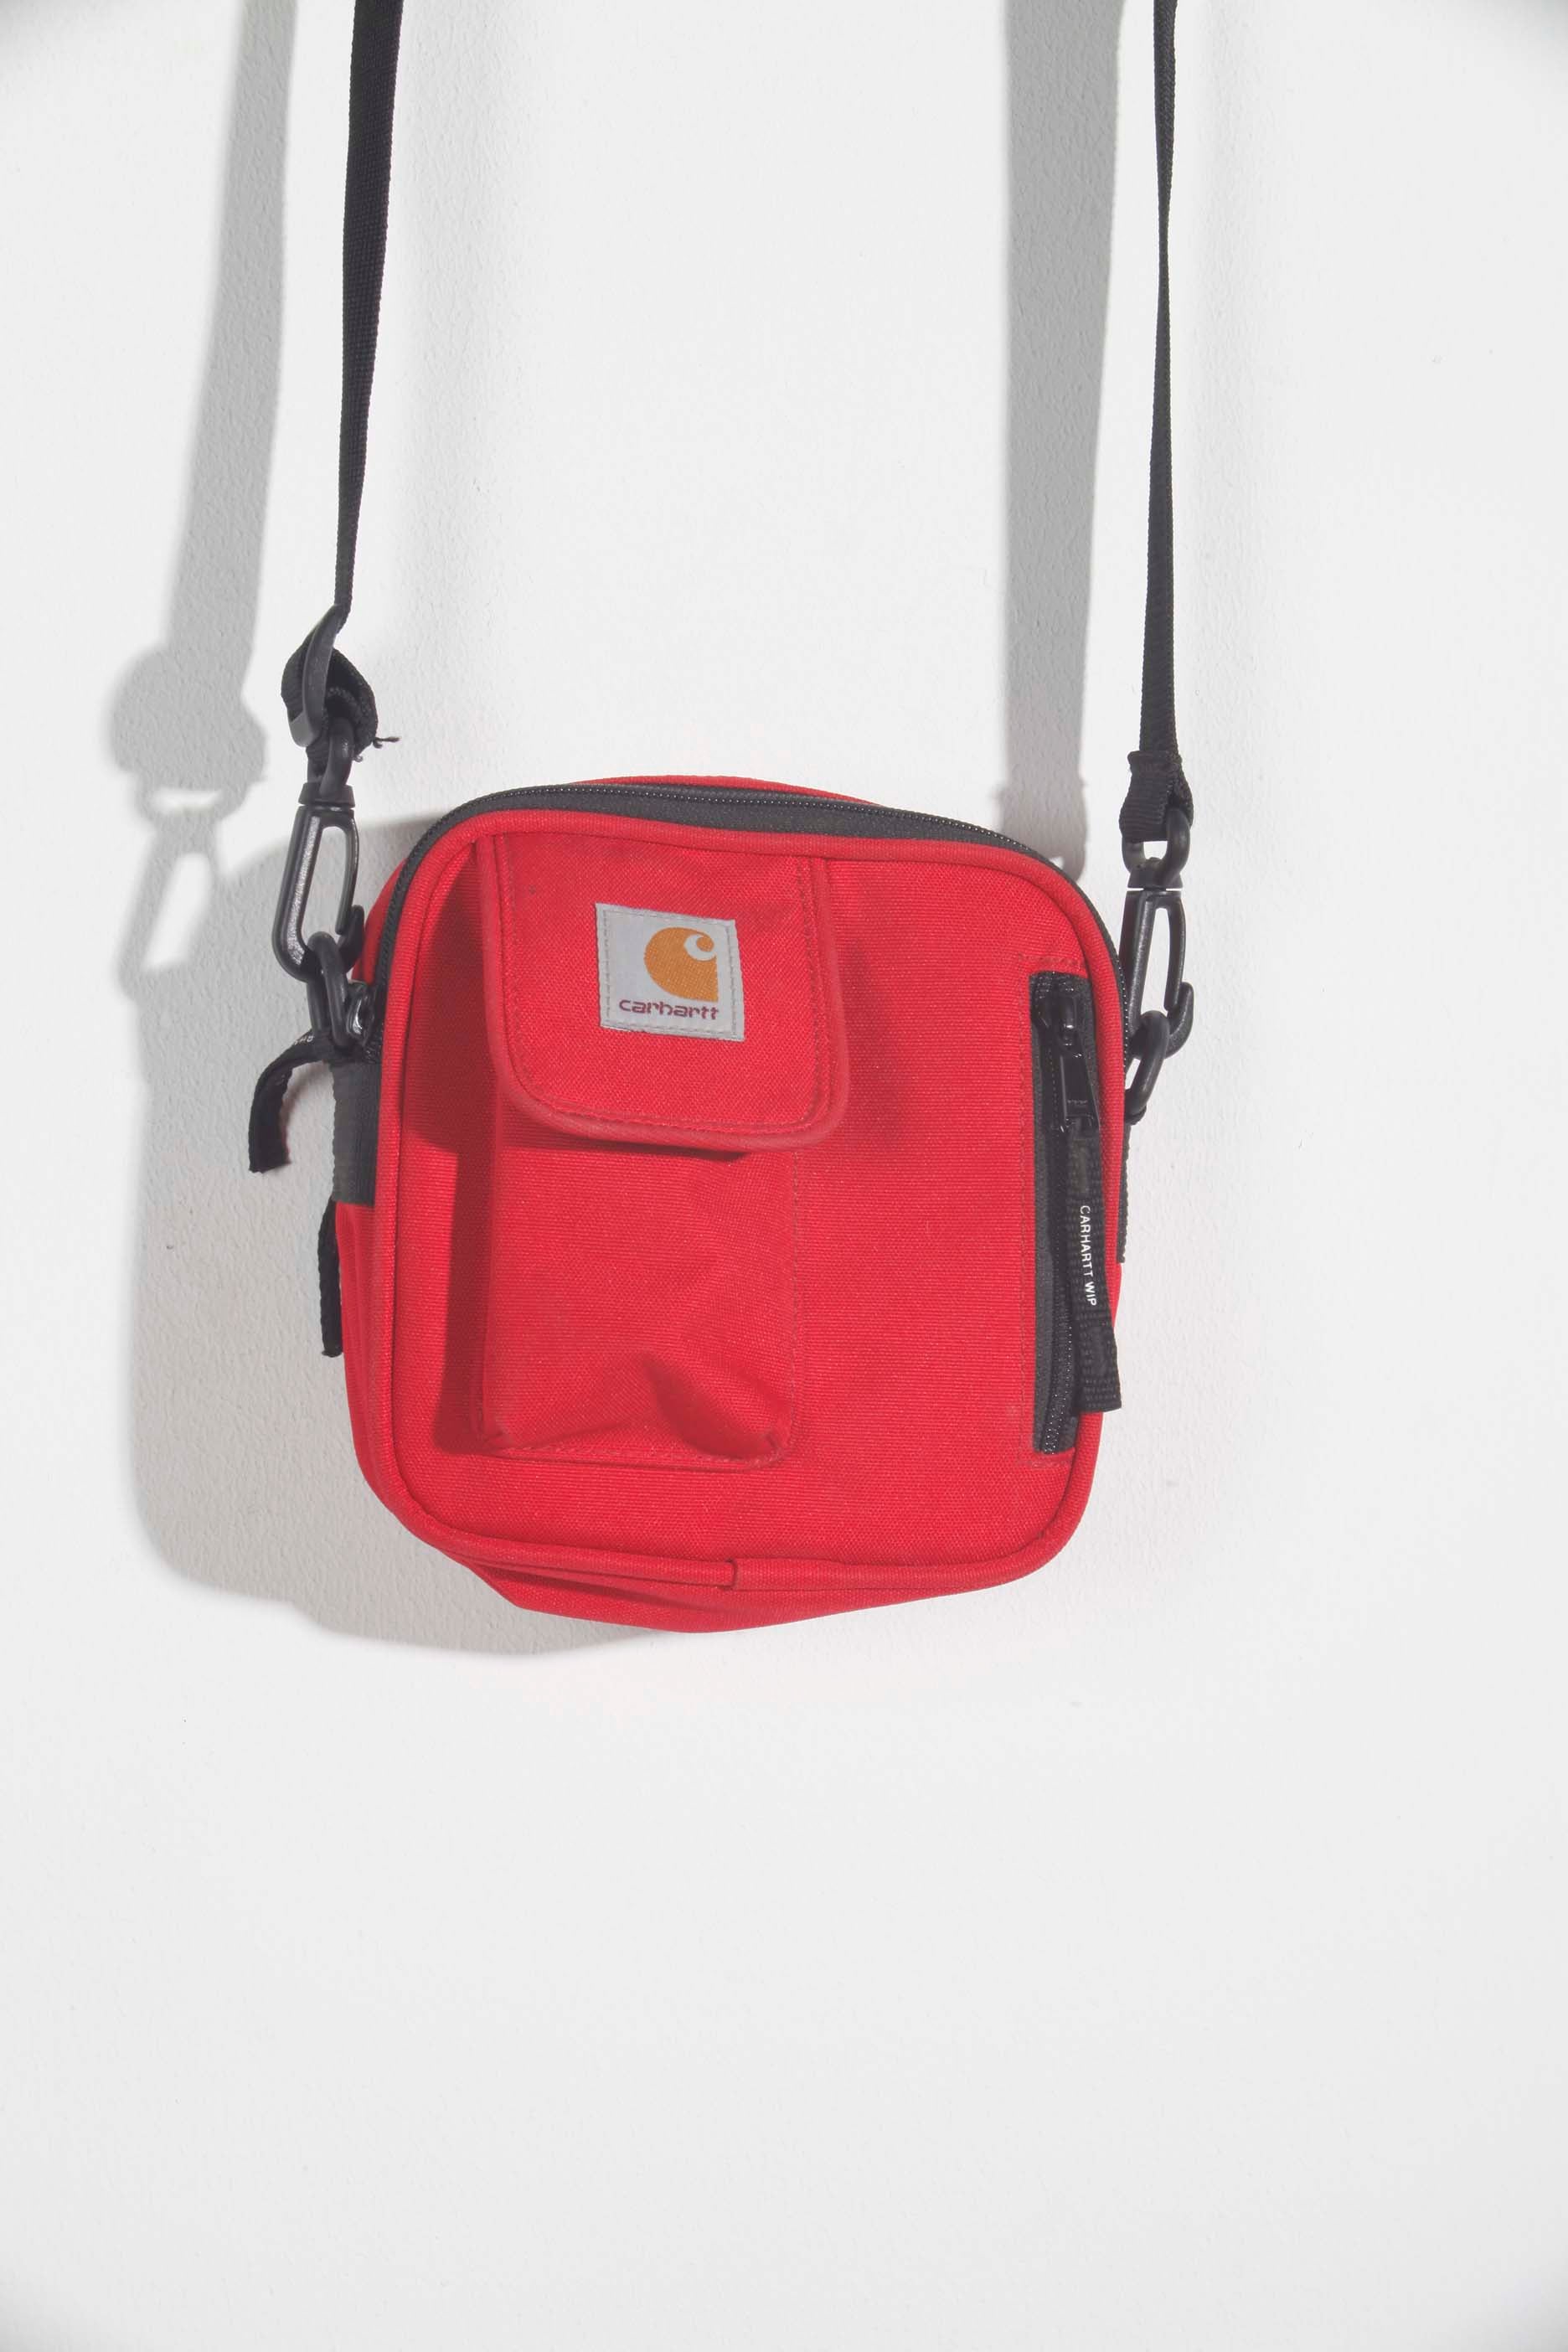 Red Carhartt Camera Bag